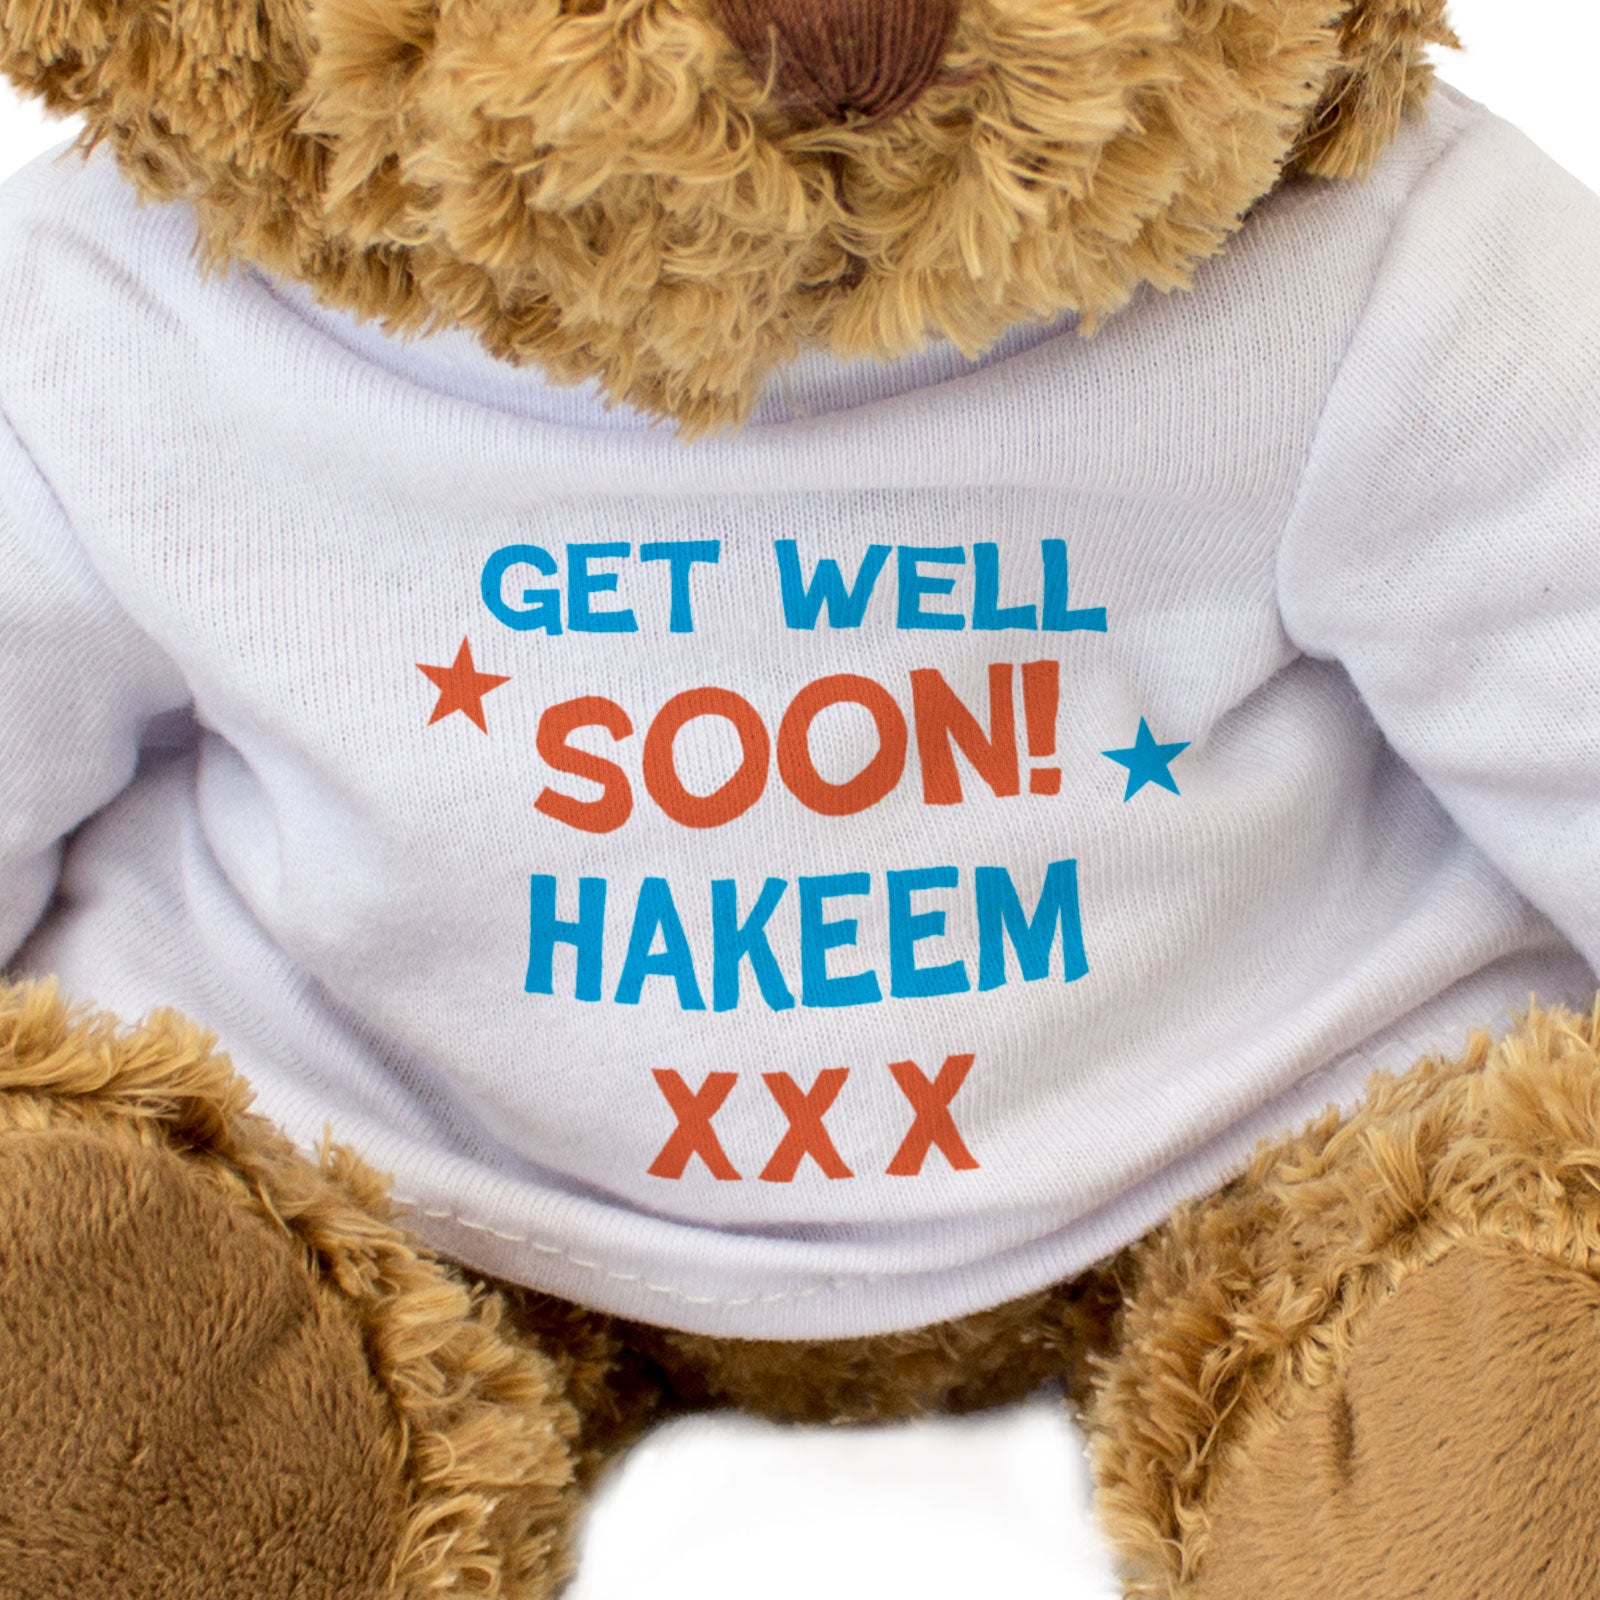 Get Well Soon Hakeem - Teddy Bear